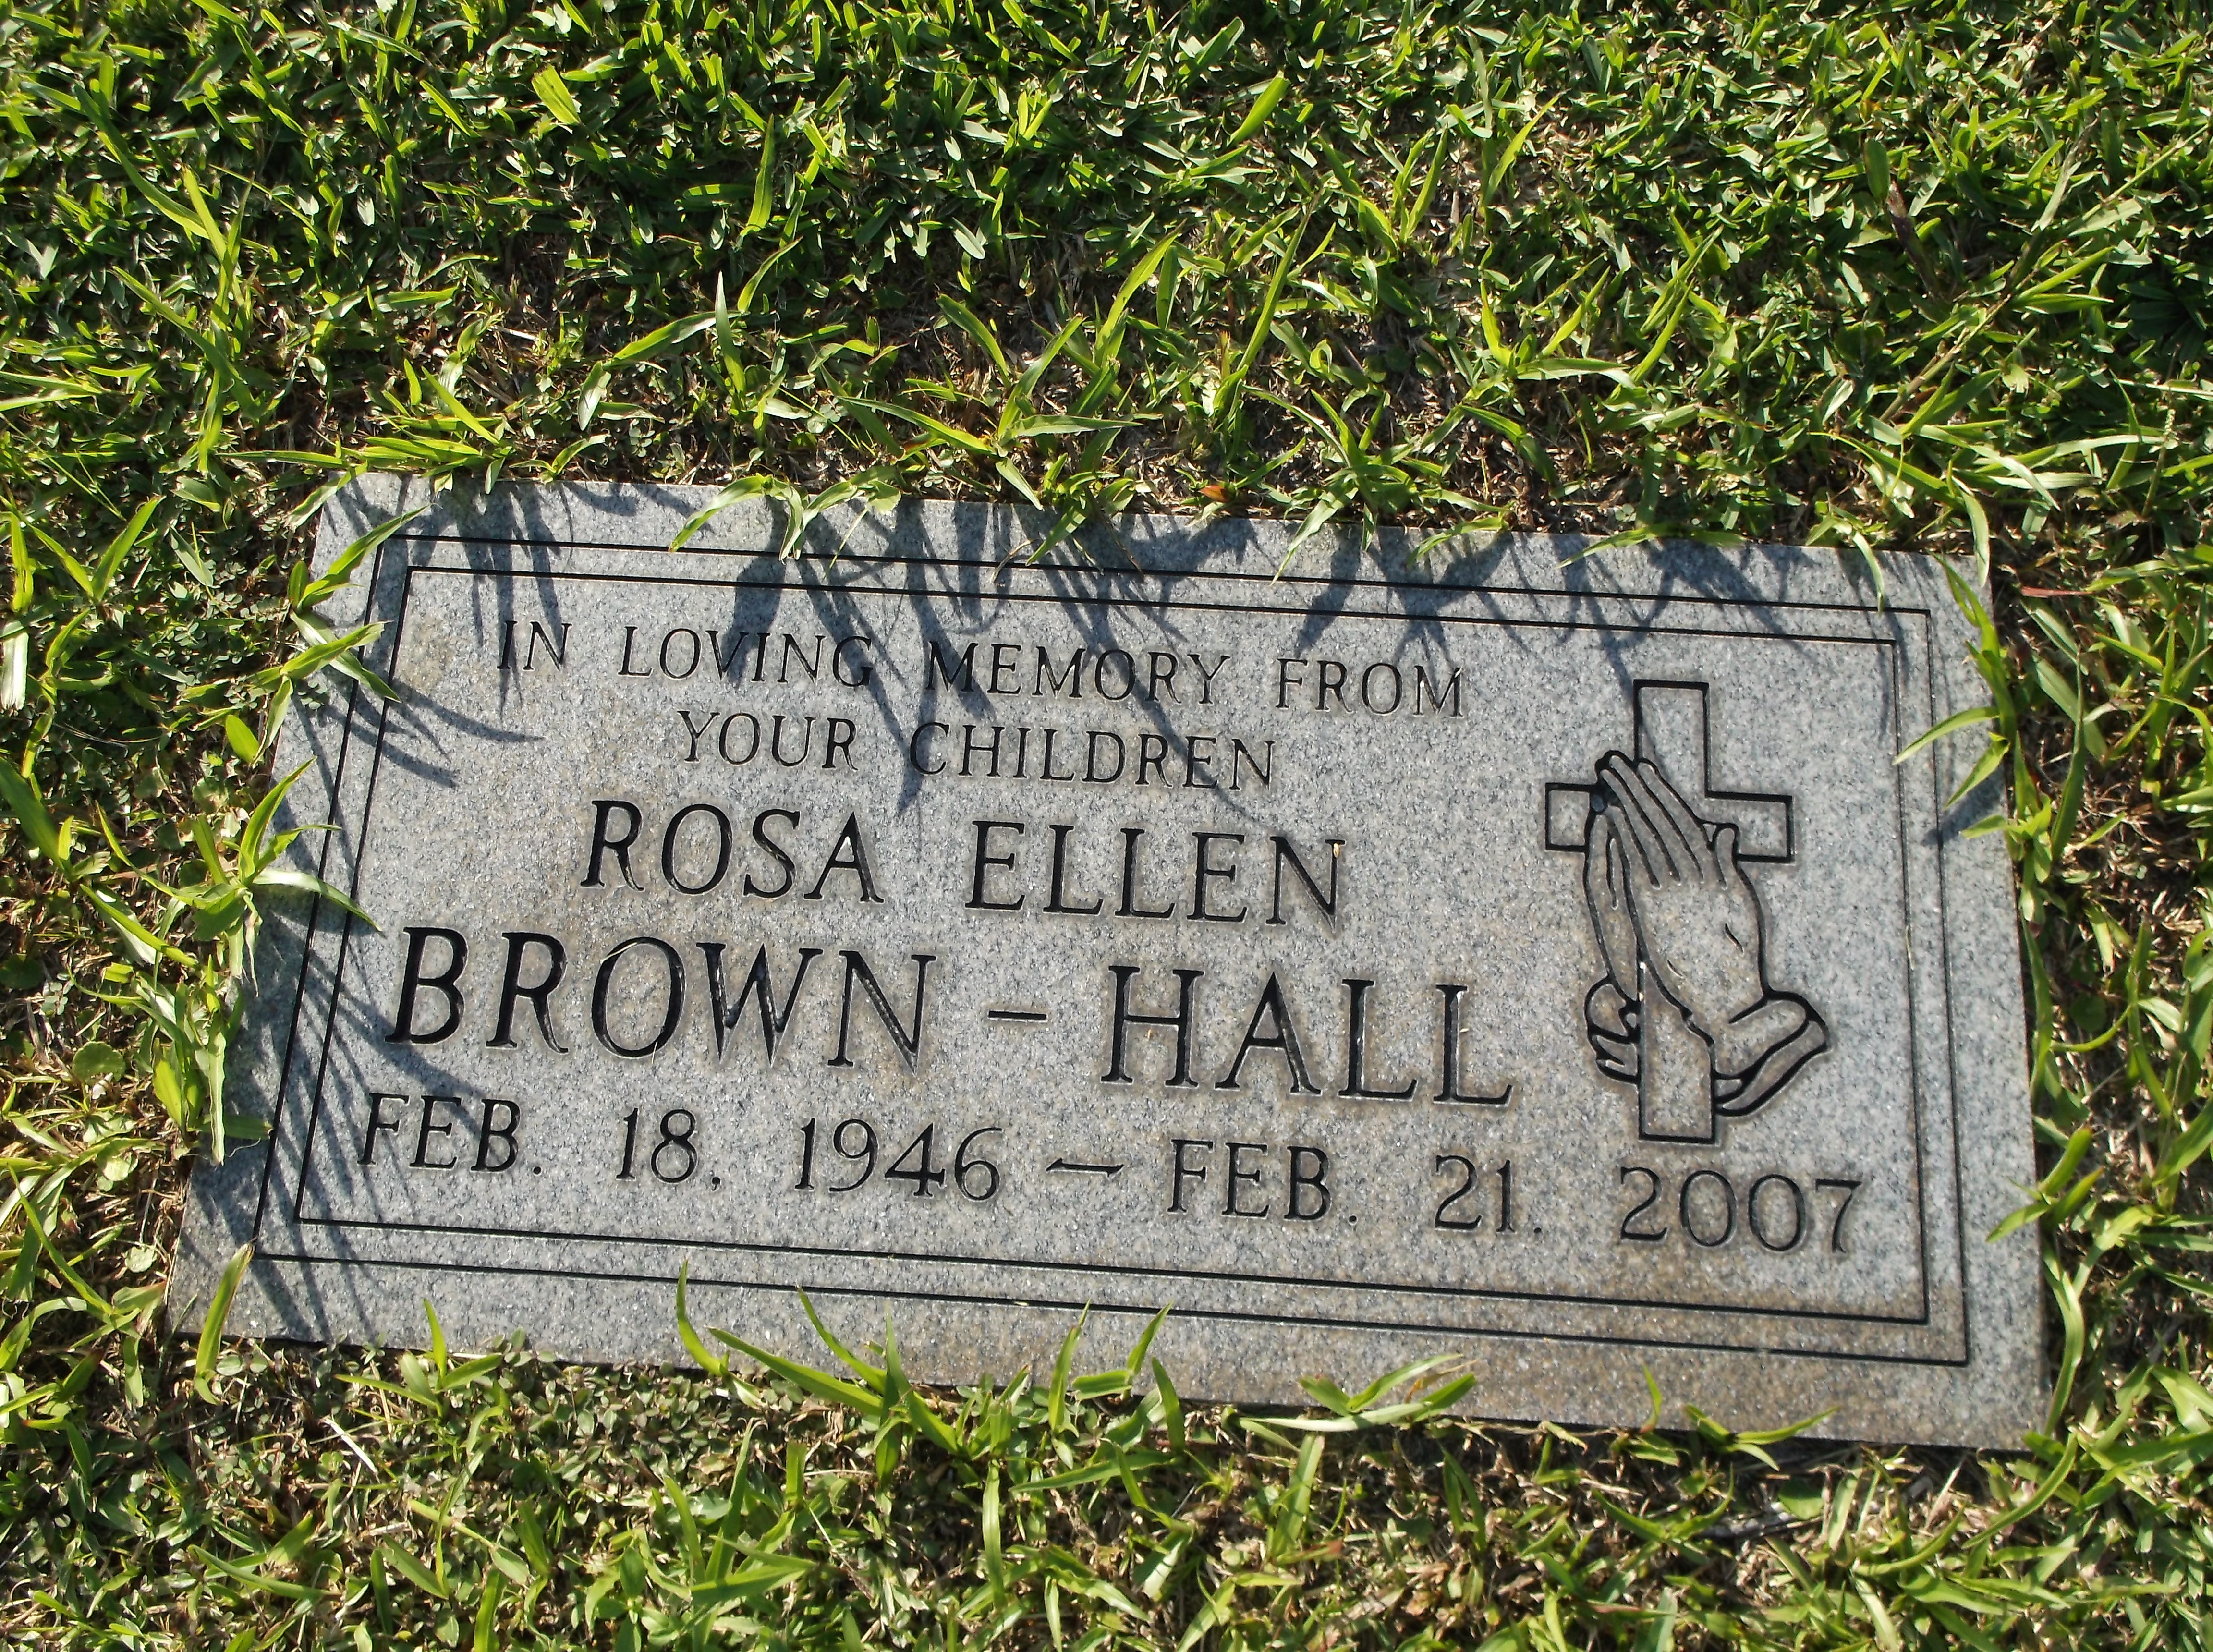 Rosa Ellen Brown Hall